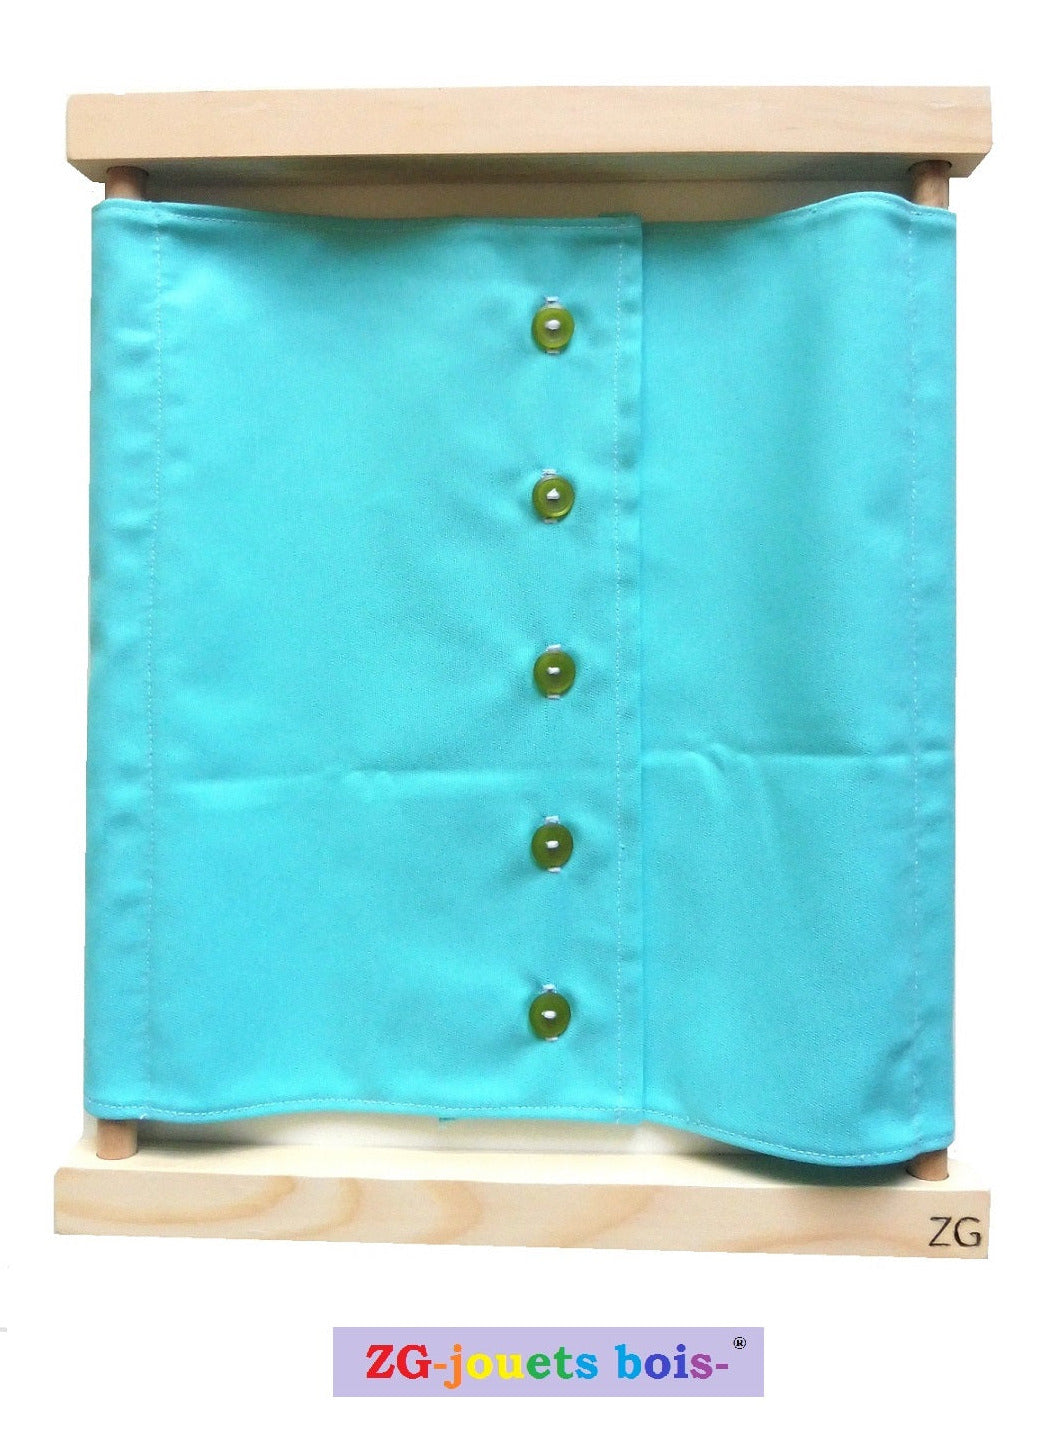 cadre habillage montessori petits boutons verts et tissu 100% coton bleu ZG